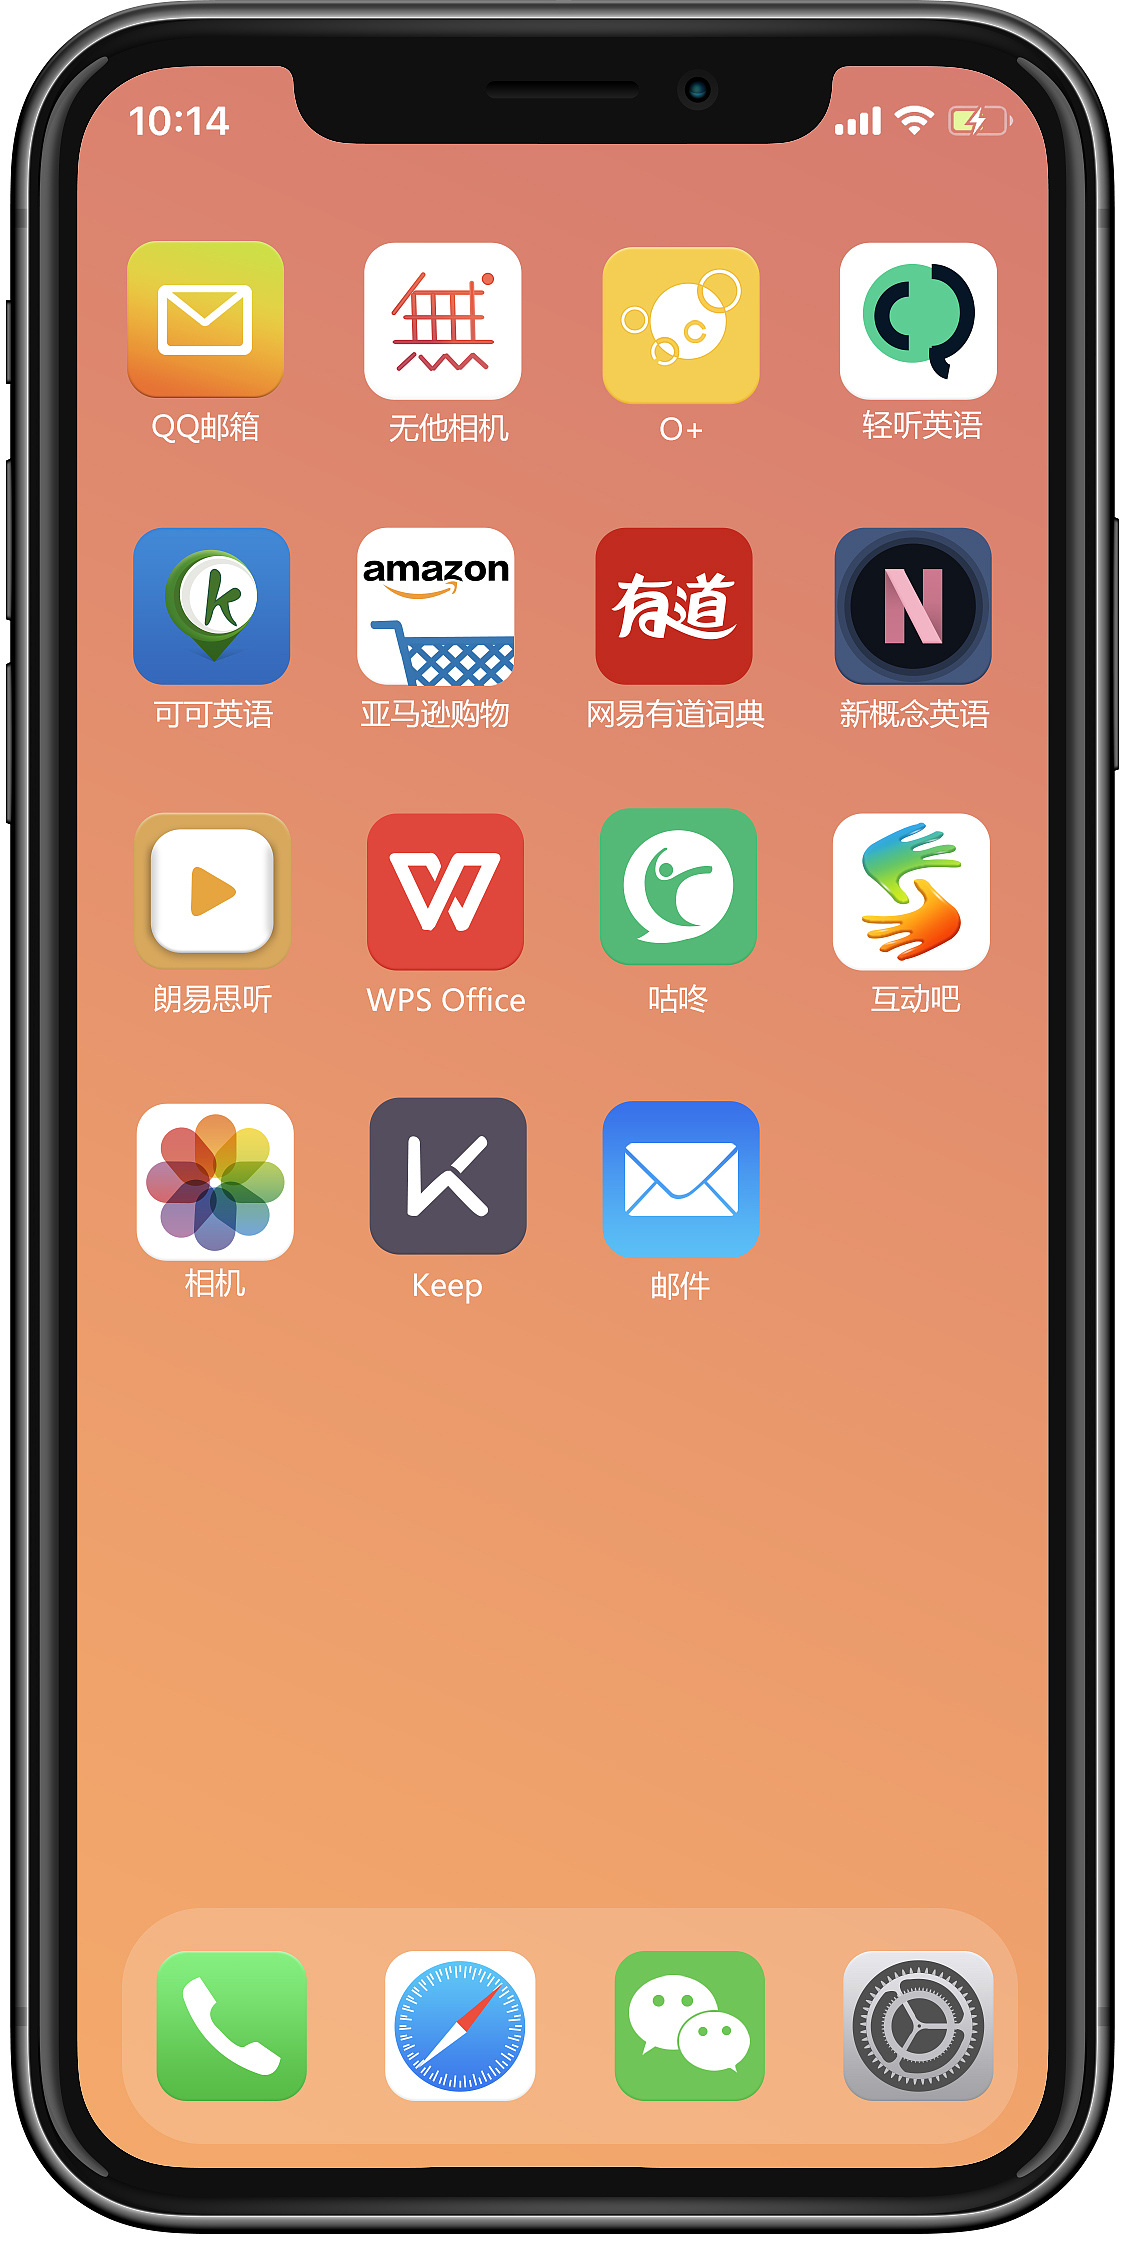 Android M GUI素材中国精选sketch素材 - 素材中国